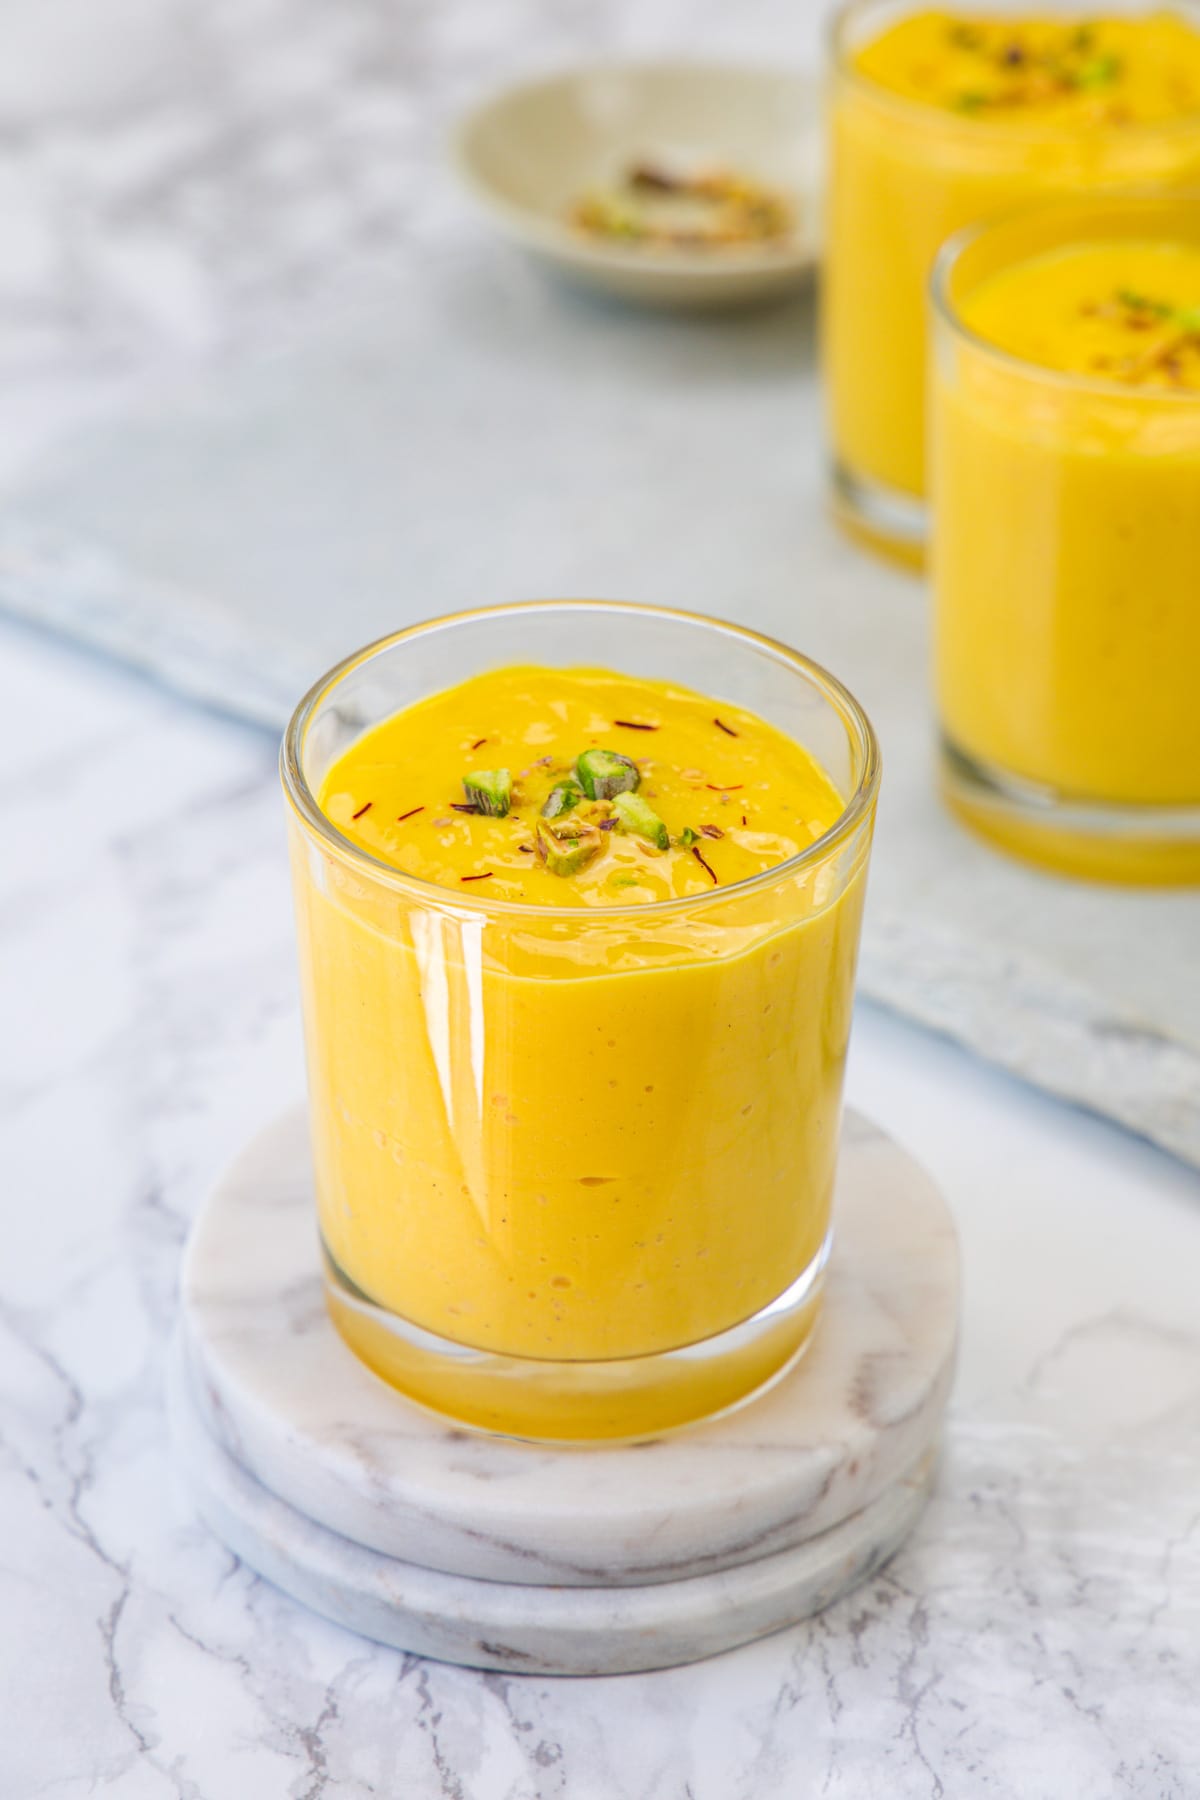 Mango Lassi Recipe - Spice Up The Curry